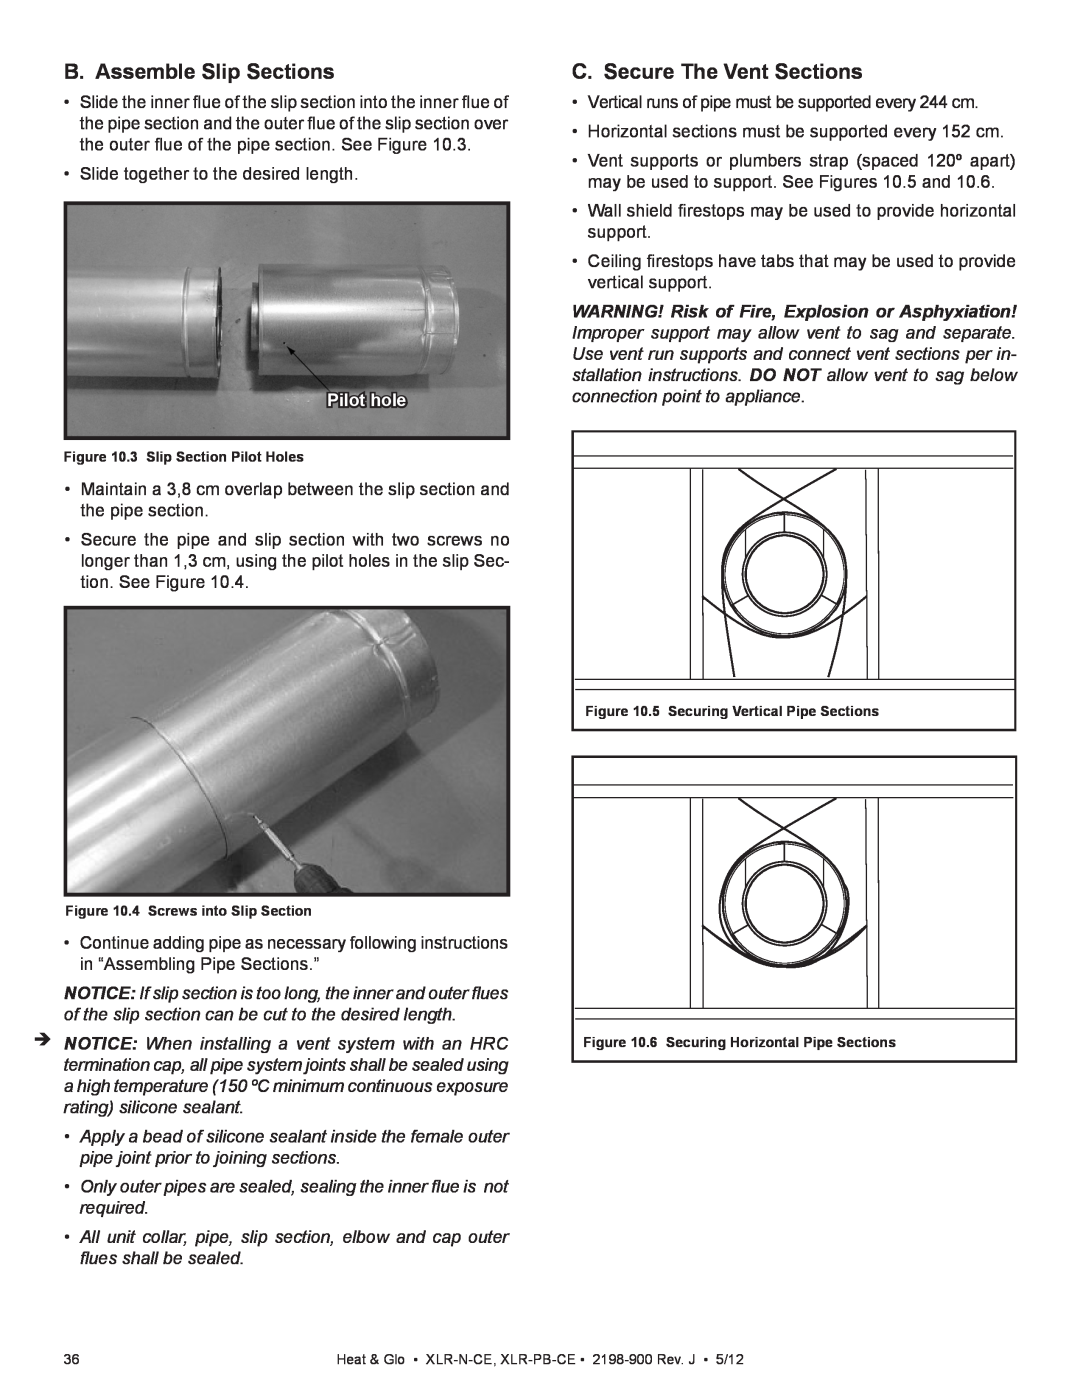 Heat & Glo LifeStyle XLR-N-CE, XLR-PB-CE manual B. Assemble Slip Sections, C. Secure The Vent Sections, Pilot hole 